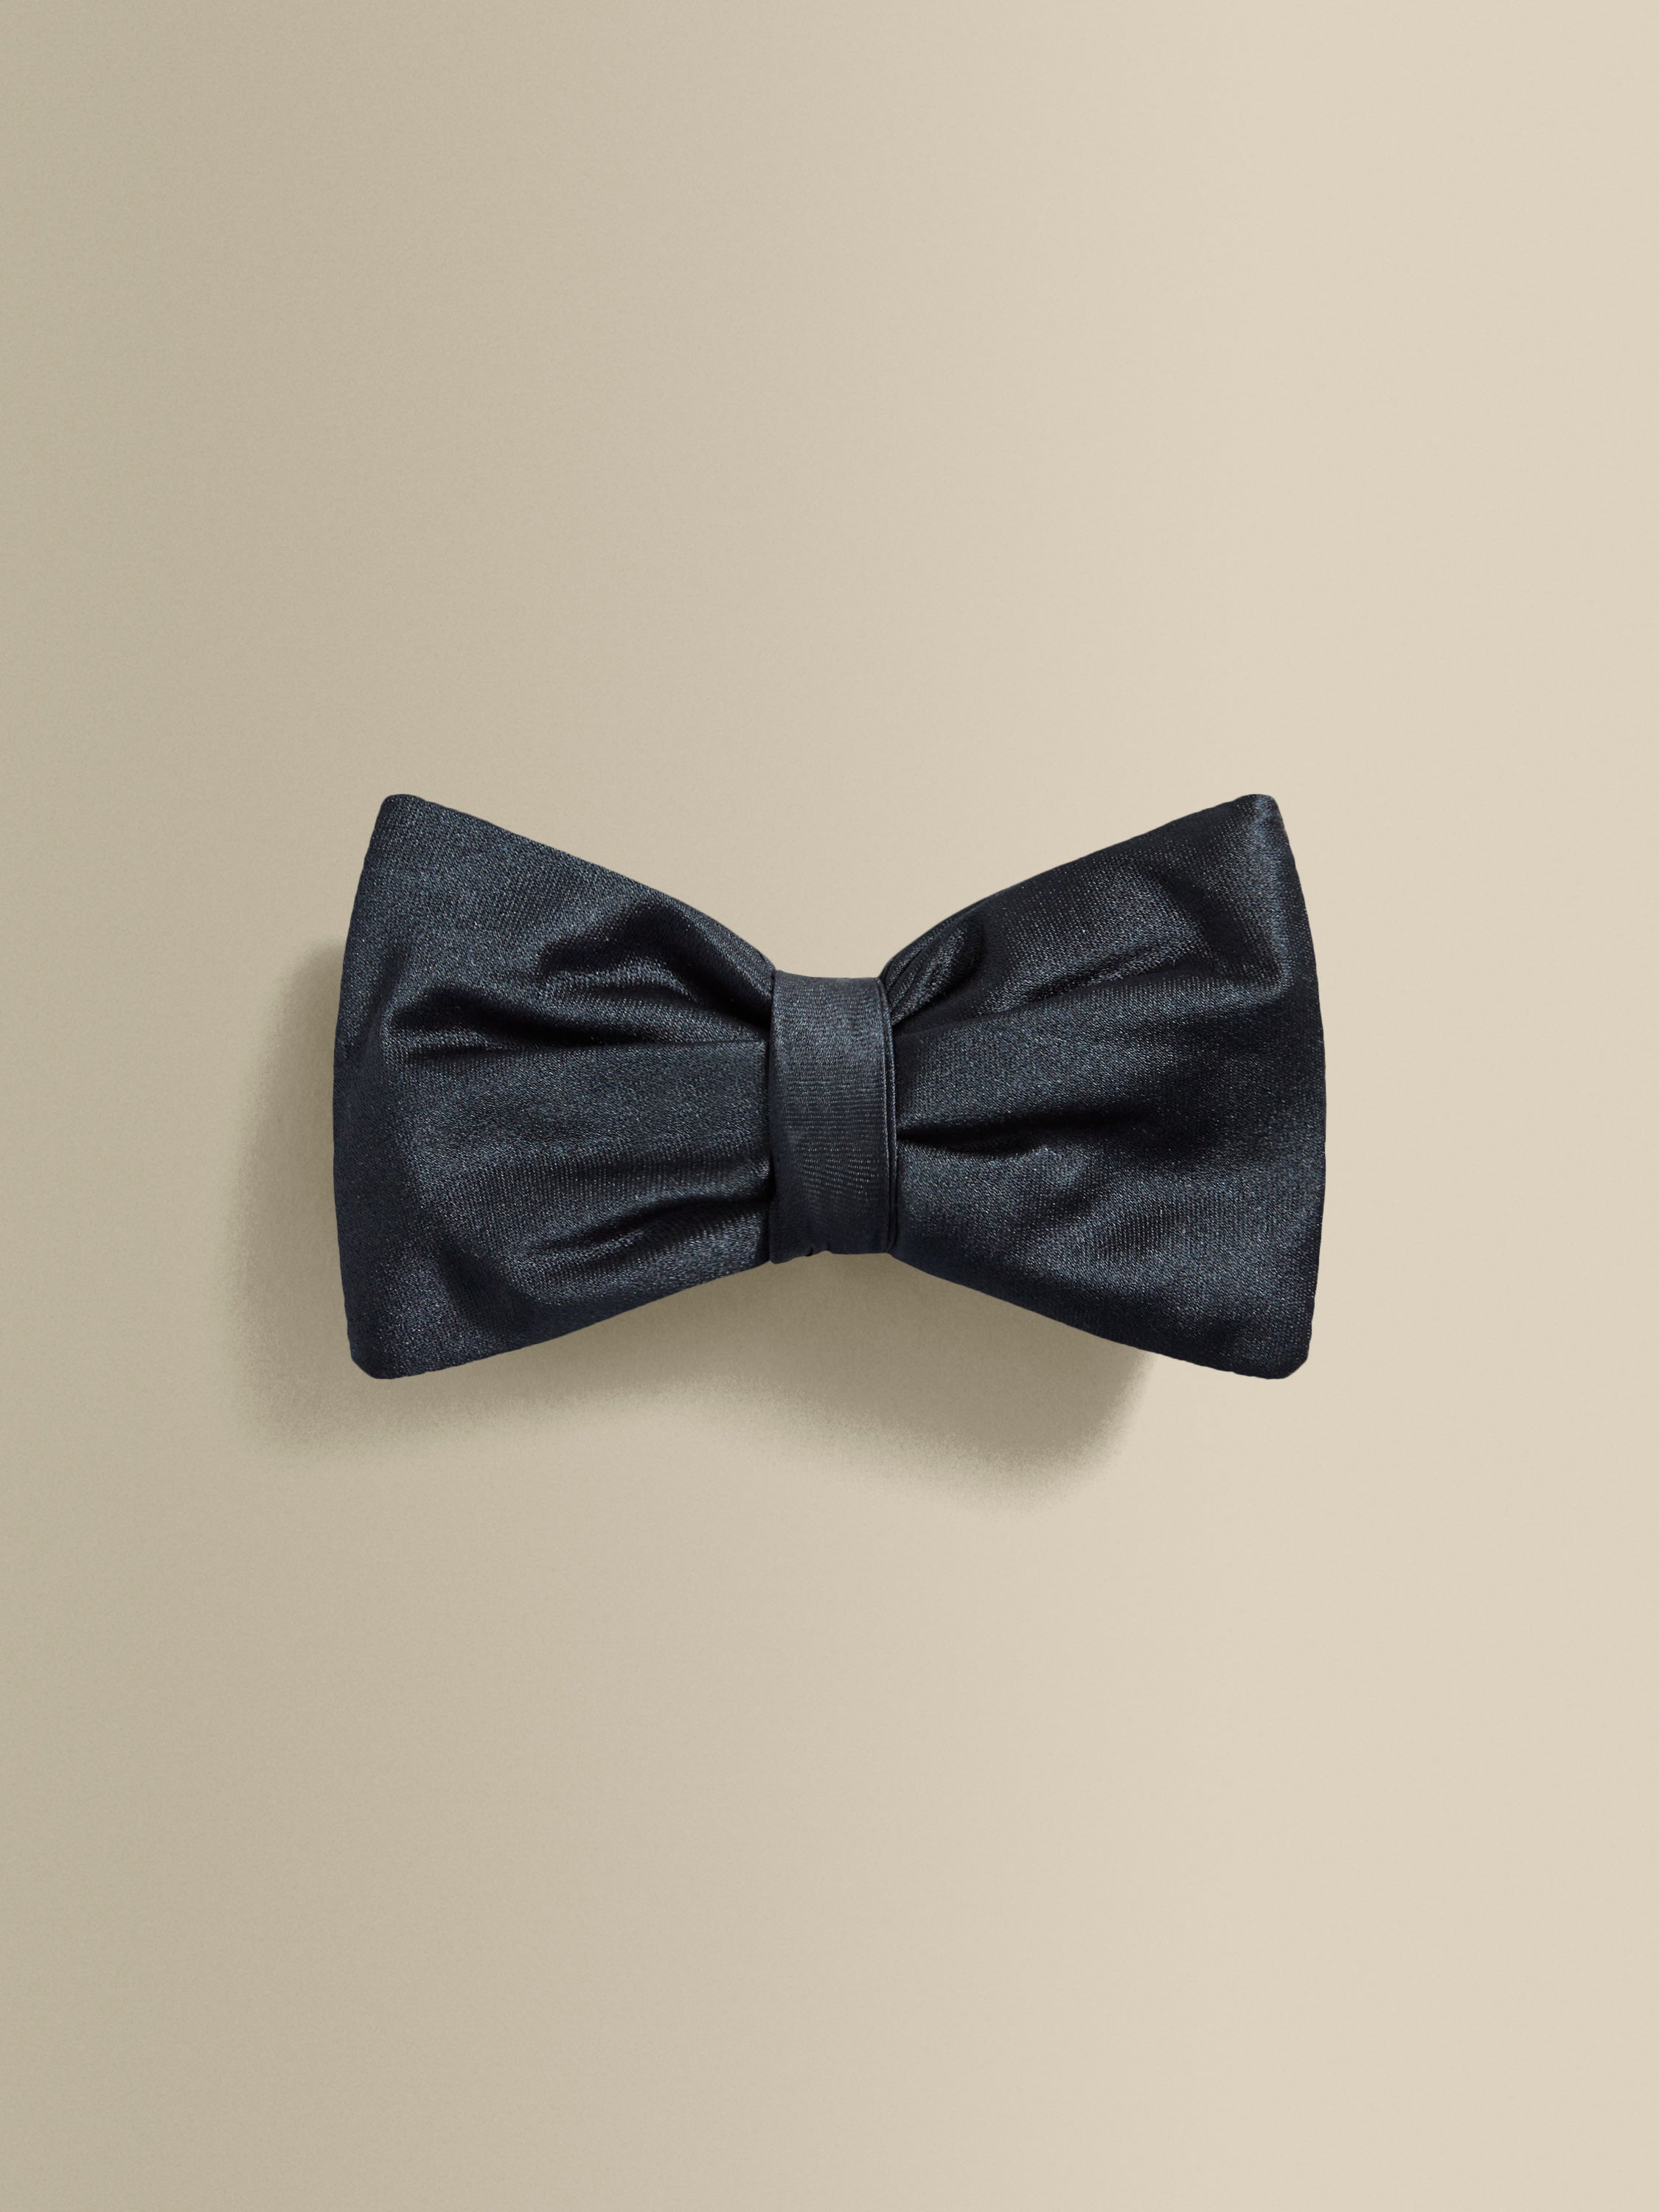 Silk Self Tie Bow Tie Midnight Navy Product Image Tied